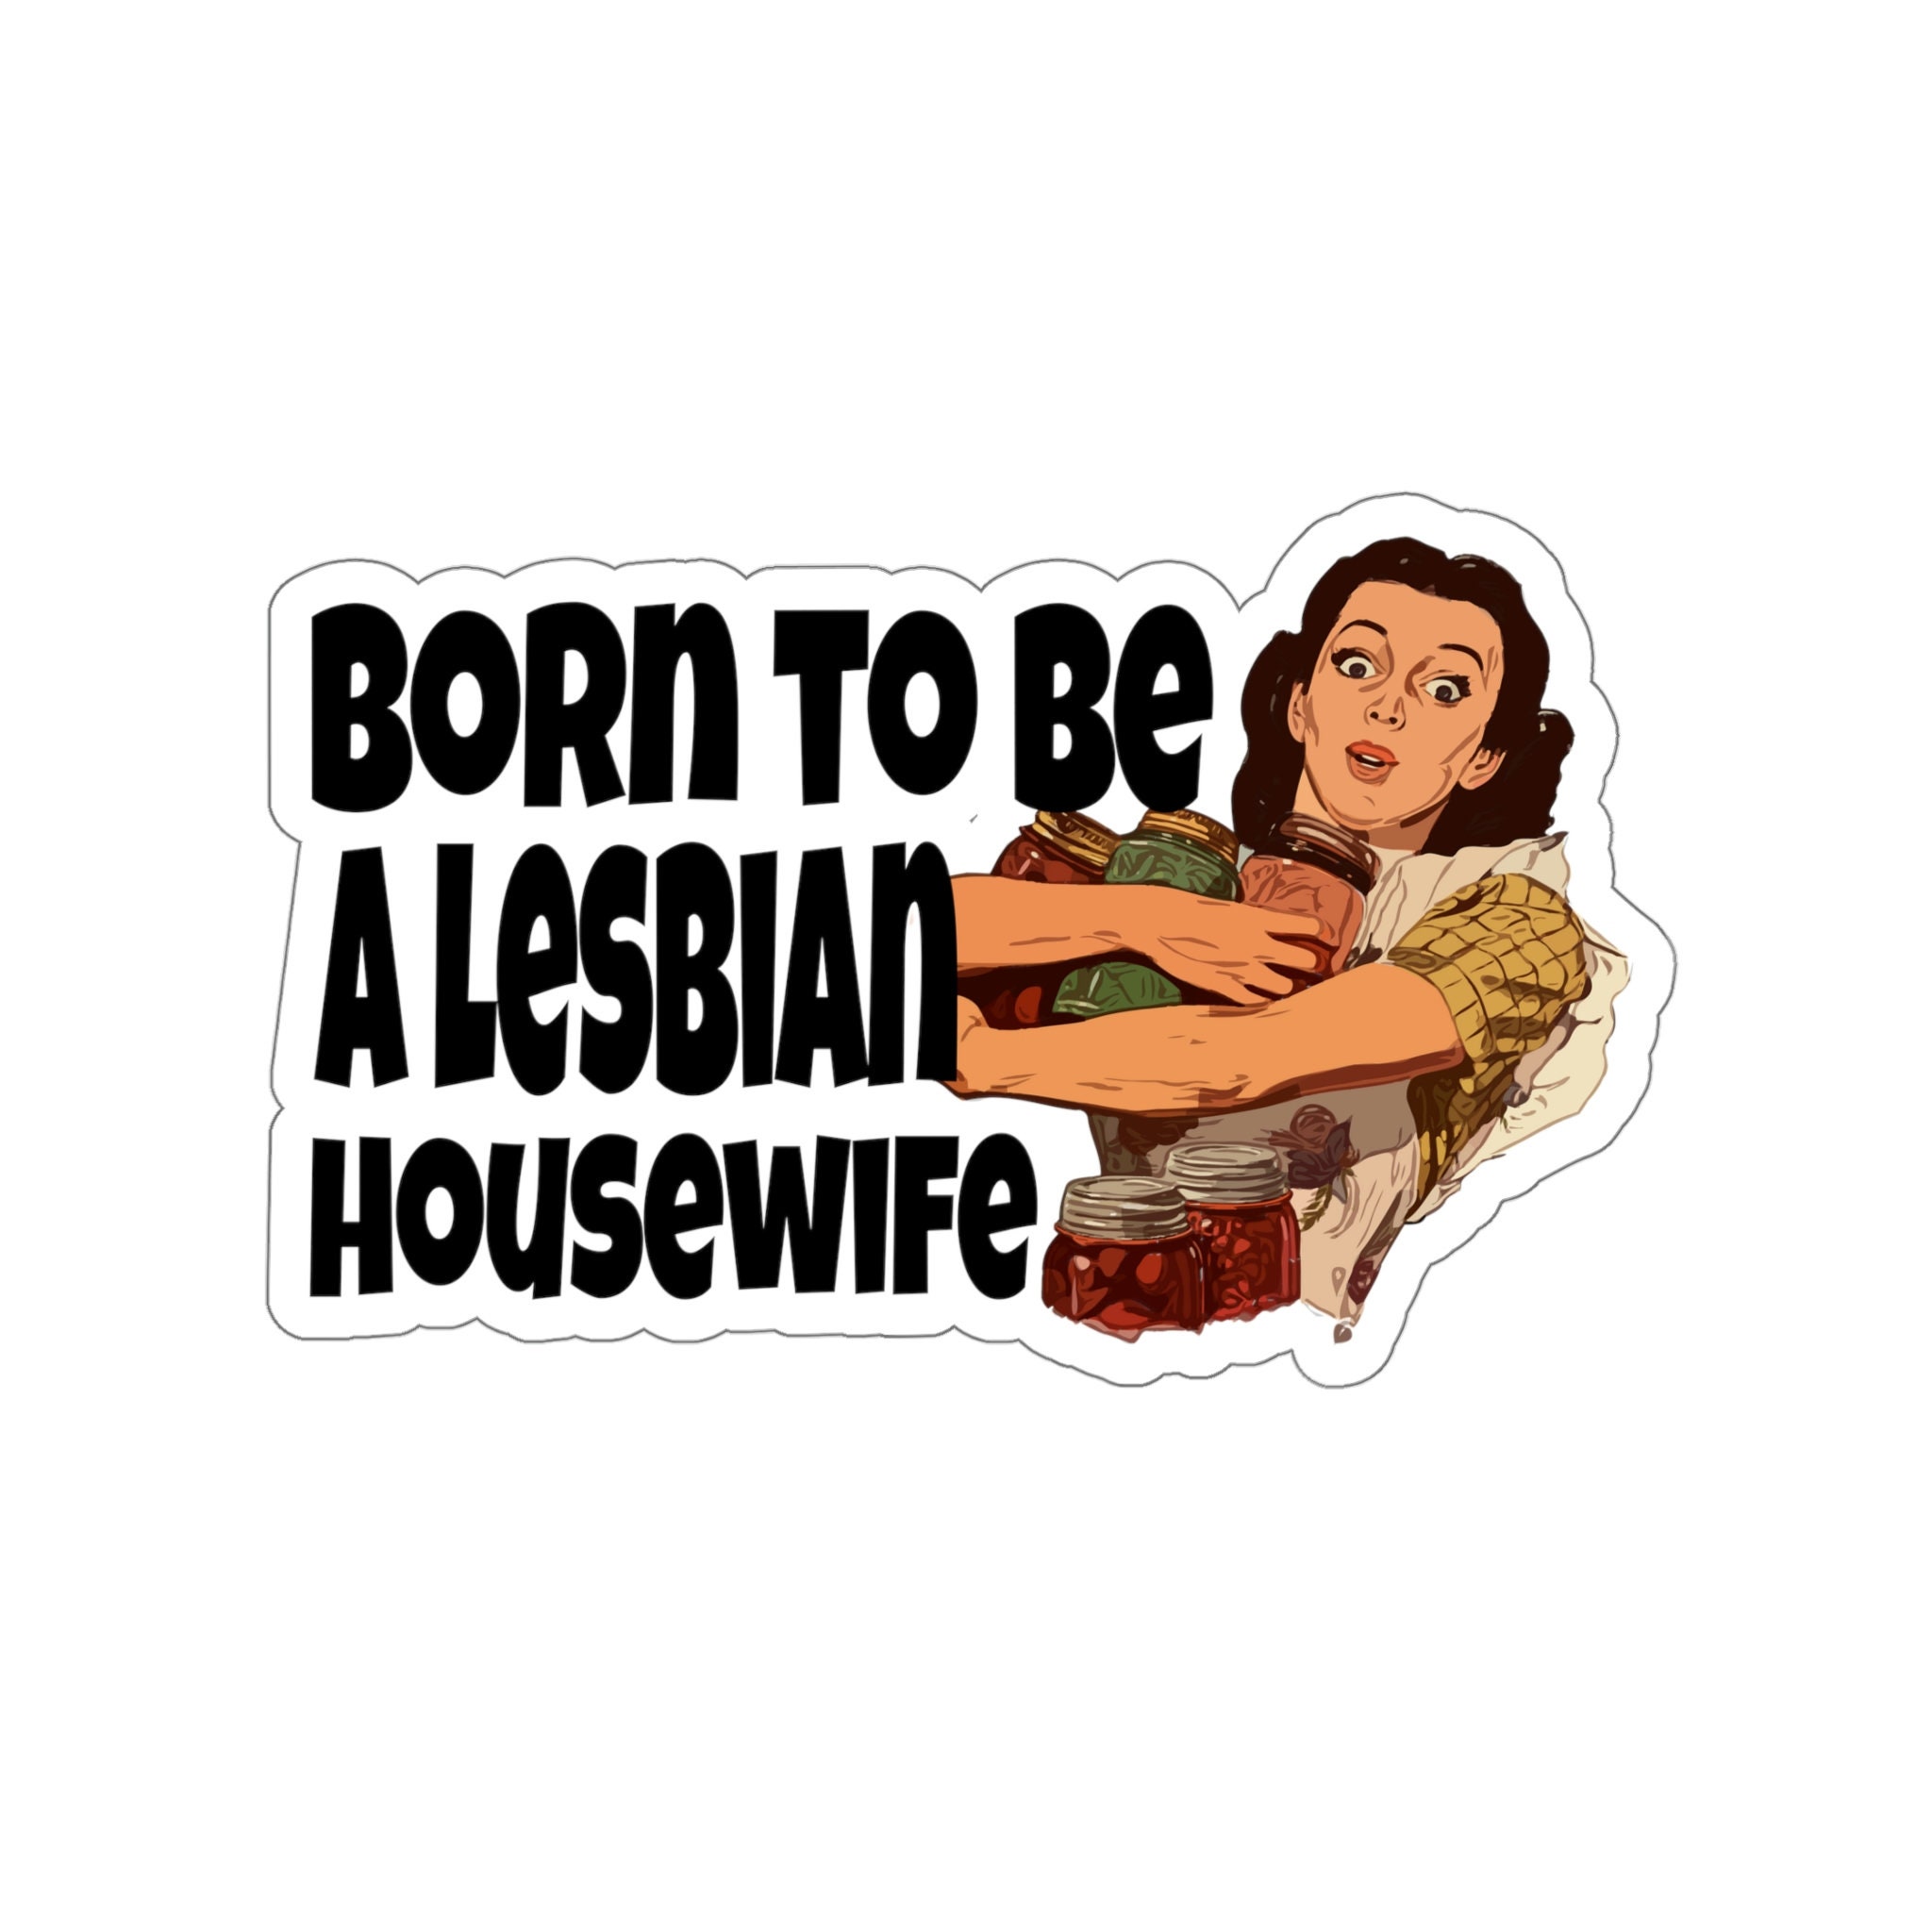 lesbian housewife books rm bali Fucking Pics Hq